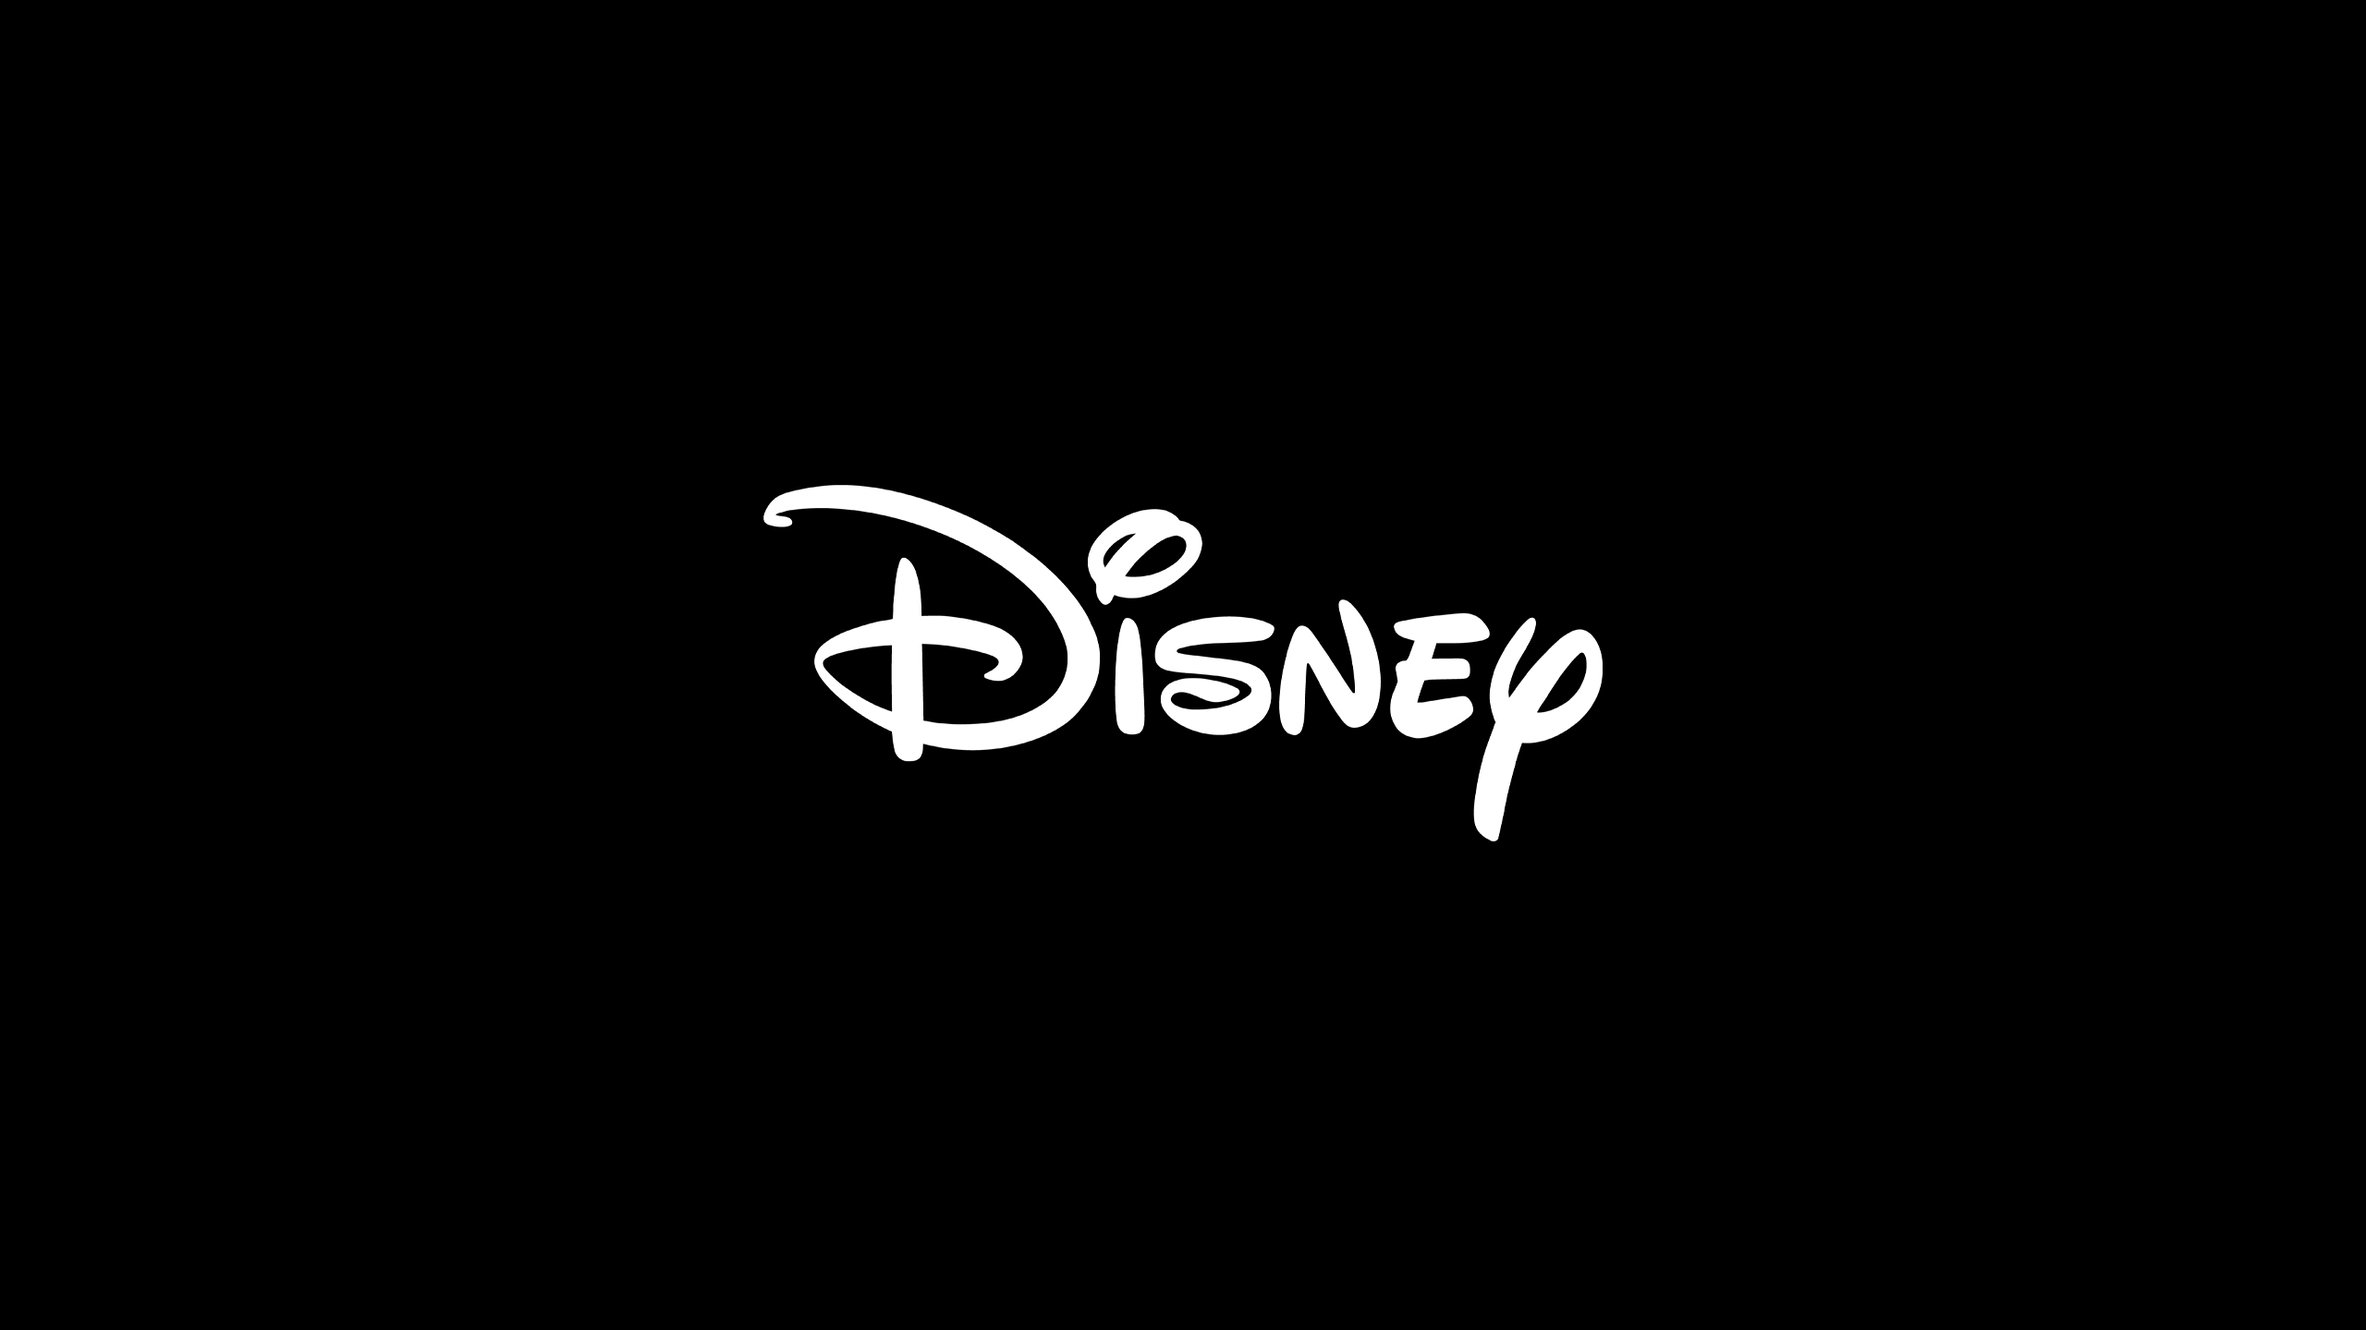 Disney Series (Featured Waitress)